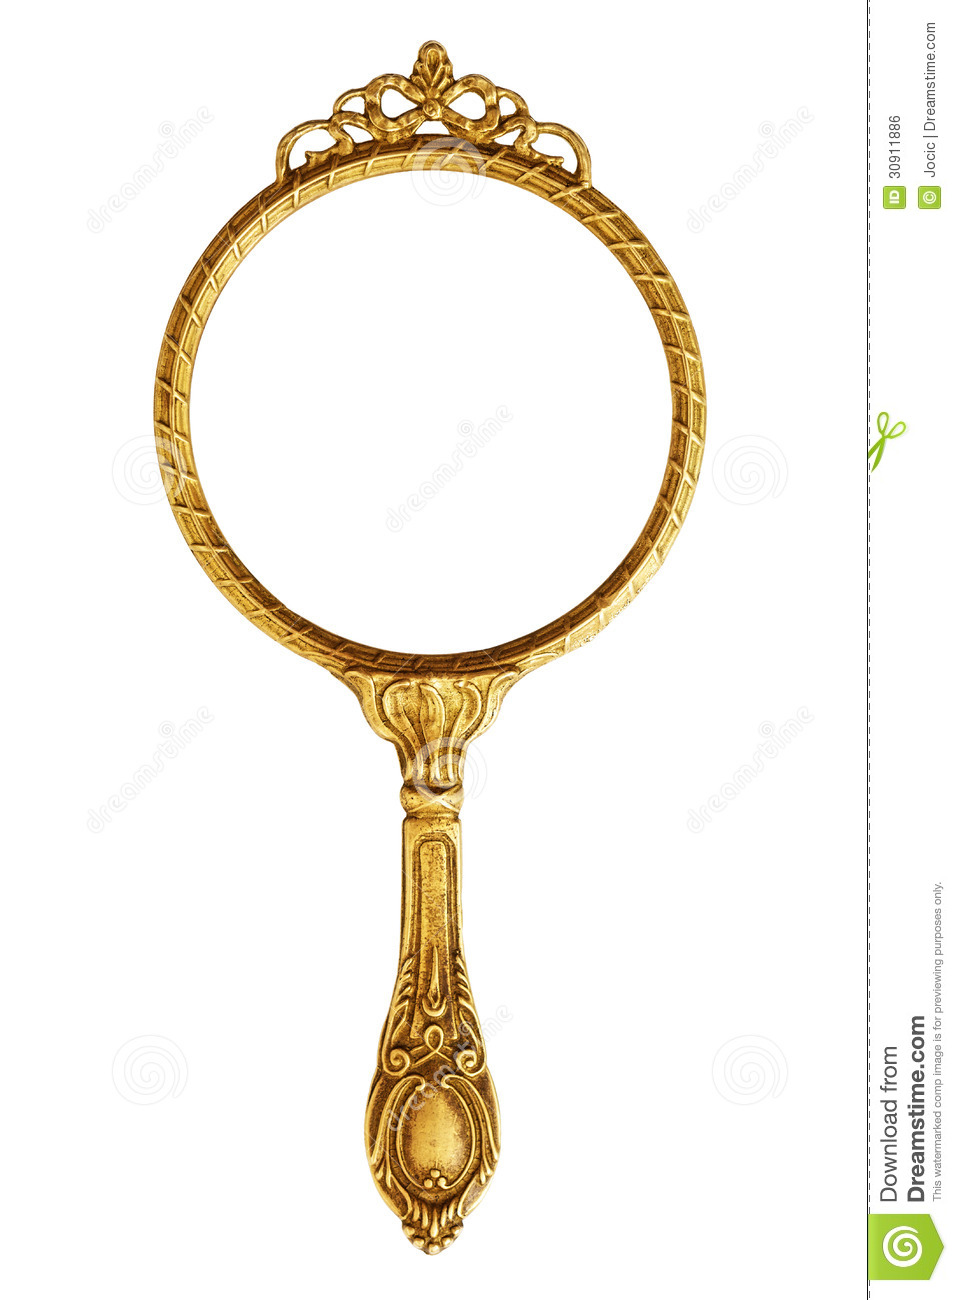 Vintage Hand Mirror Royalty Free Stock Image   Image  30911886